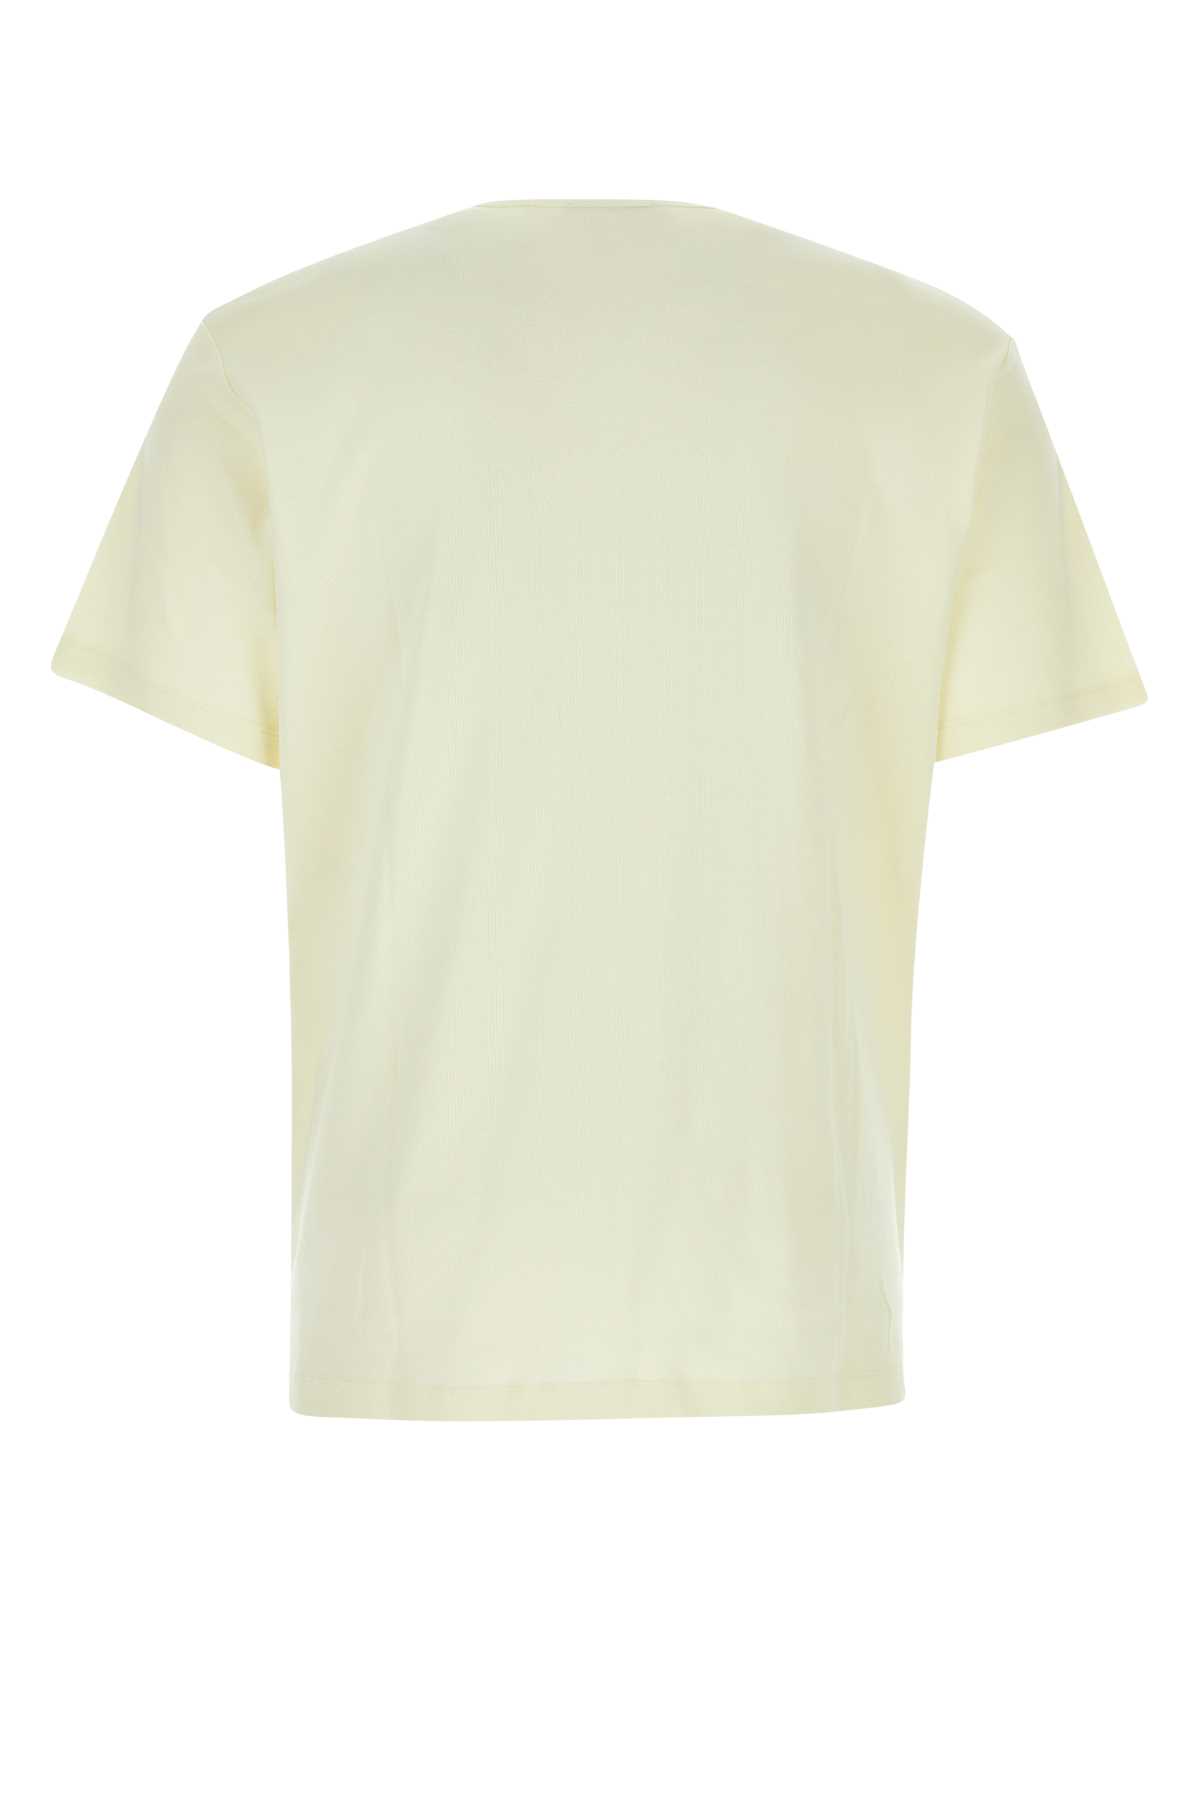 Lemaire Cream Cotton T-shirt In Lemgla